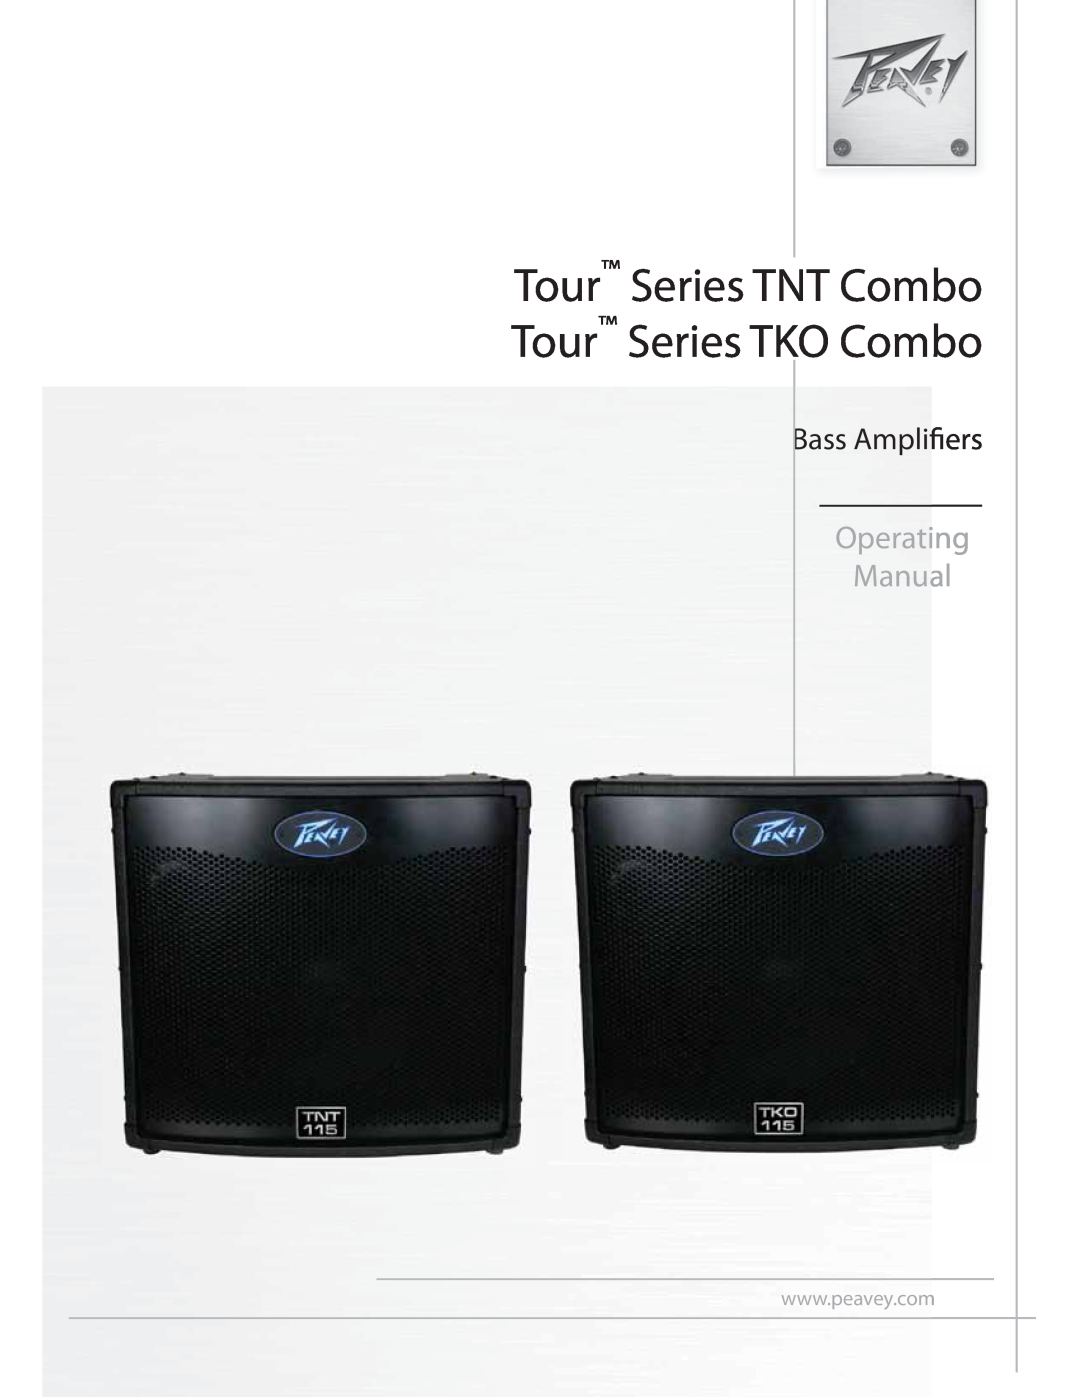 Peavey manual Tour Series TNT Combo Tour Series TKO Combo, Operating Manual, Bass Amplifiers 